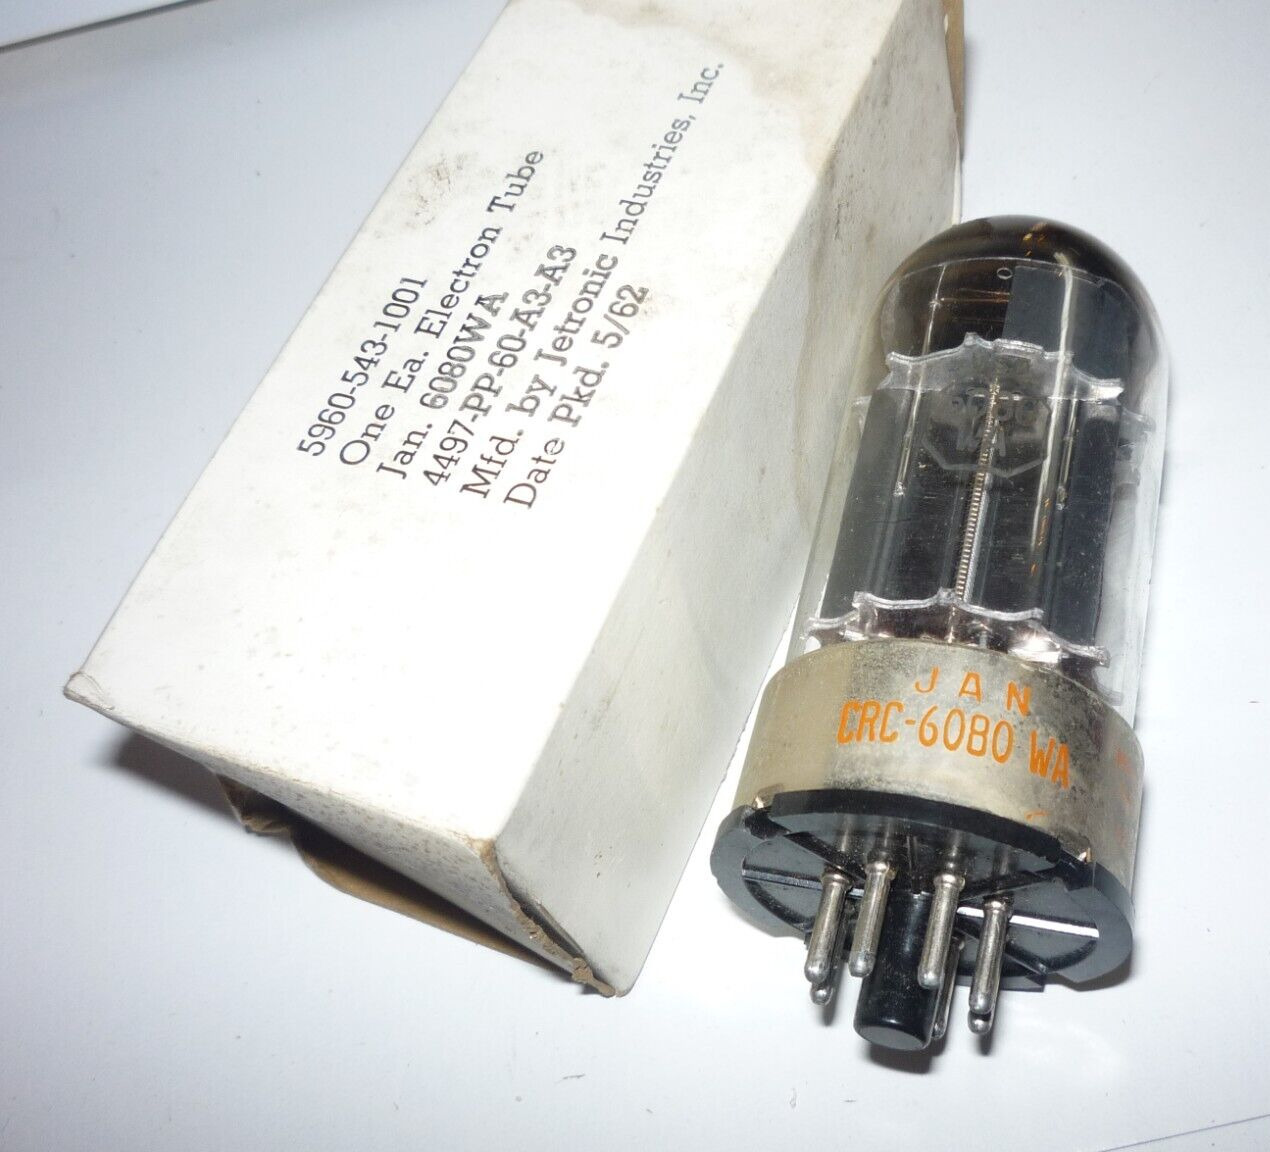 6080  WA TUBE JAN 6080WA ELECTRON TUBE NOS 1962 BY JETRONIC INDUSTRIES - TESTED